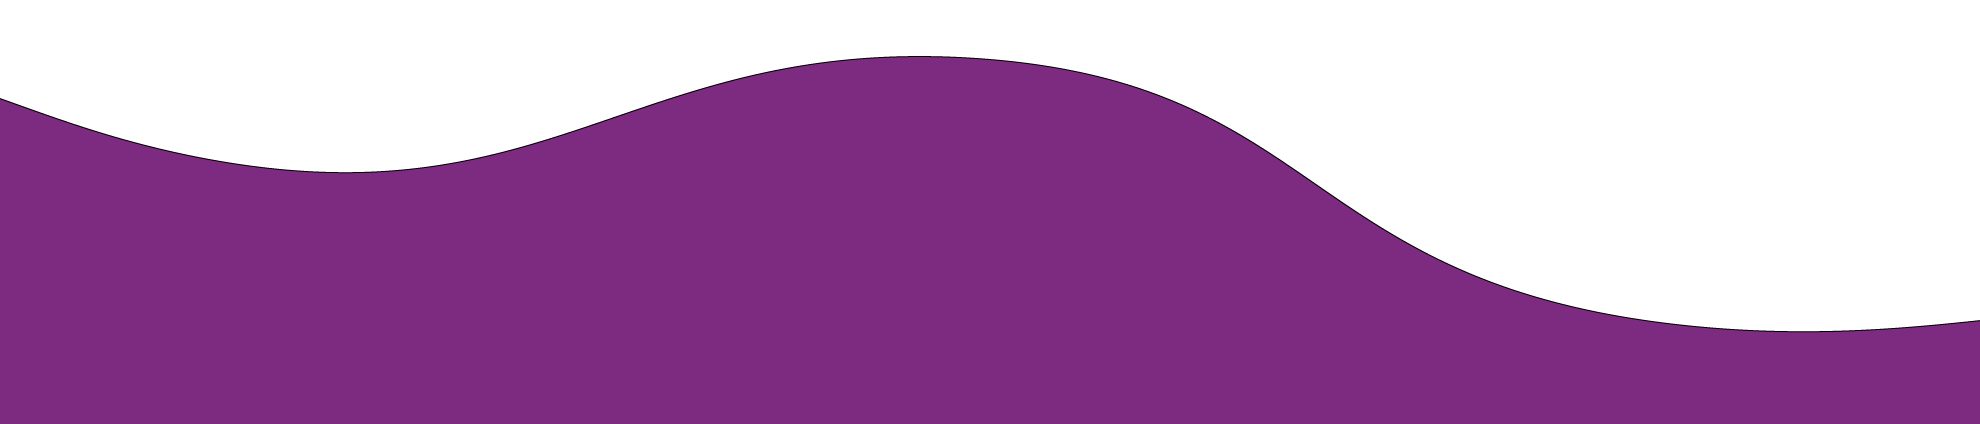 purple-wave-bg